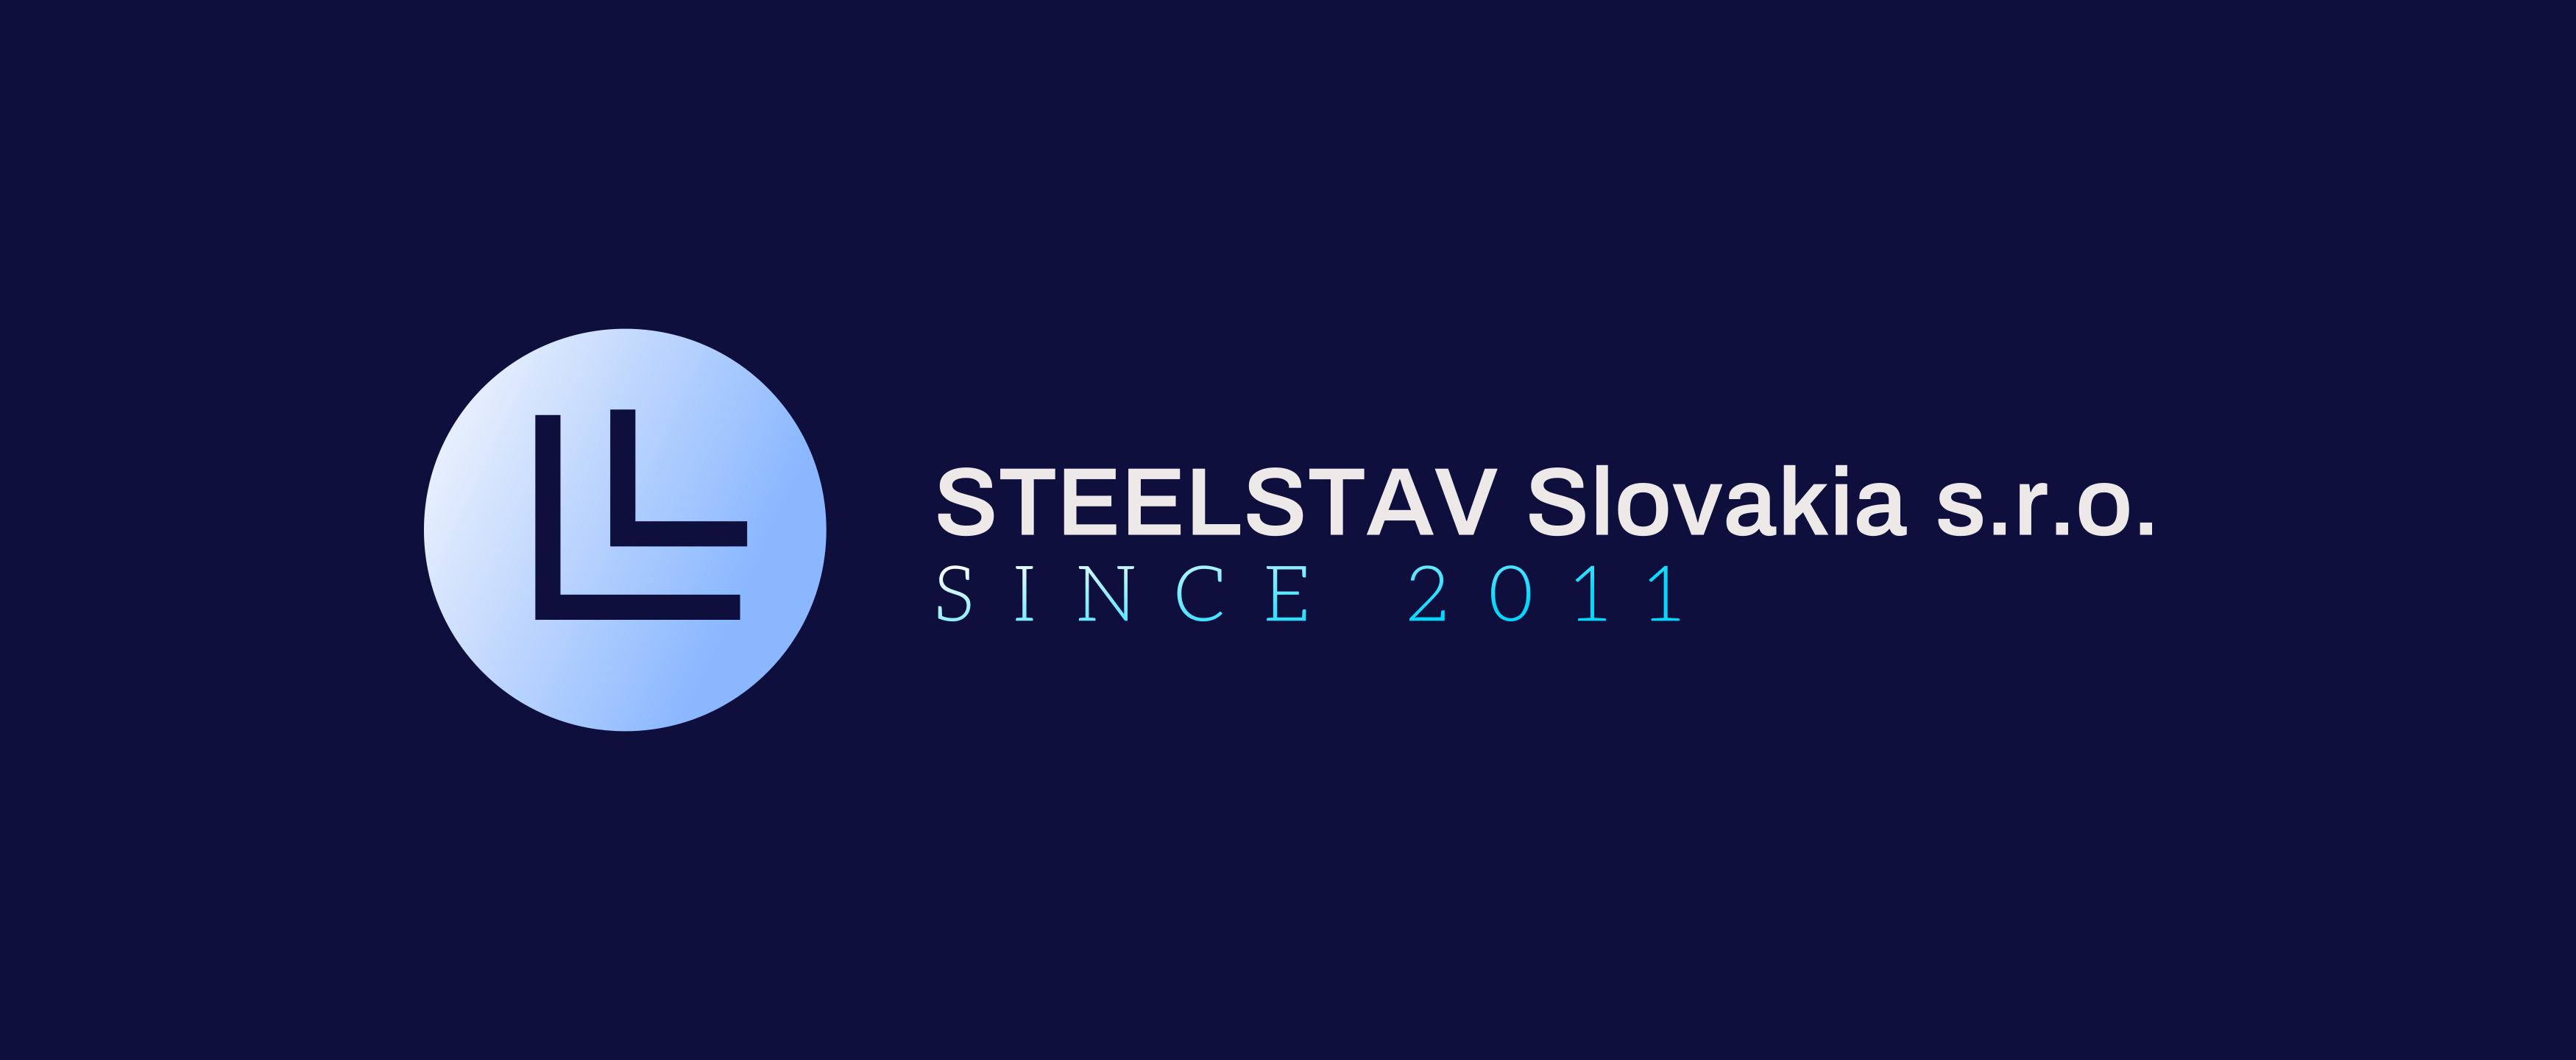 STEELSTAV Slovakia s.r.o.